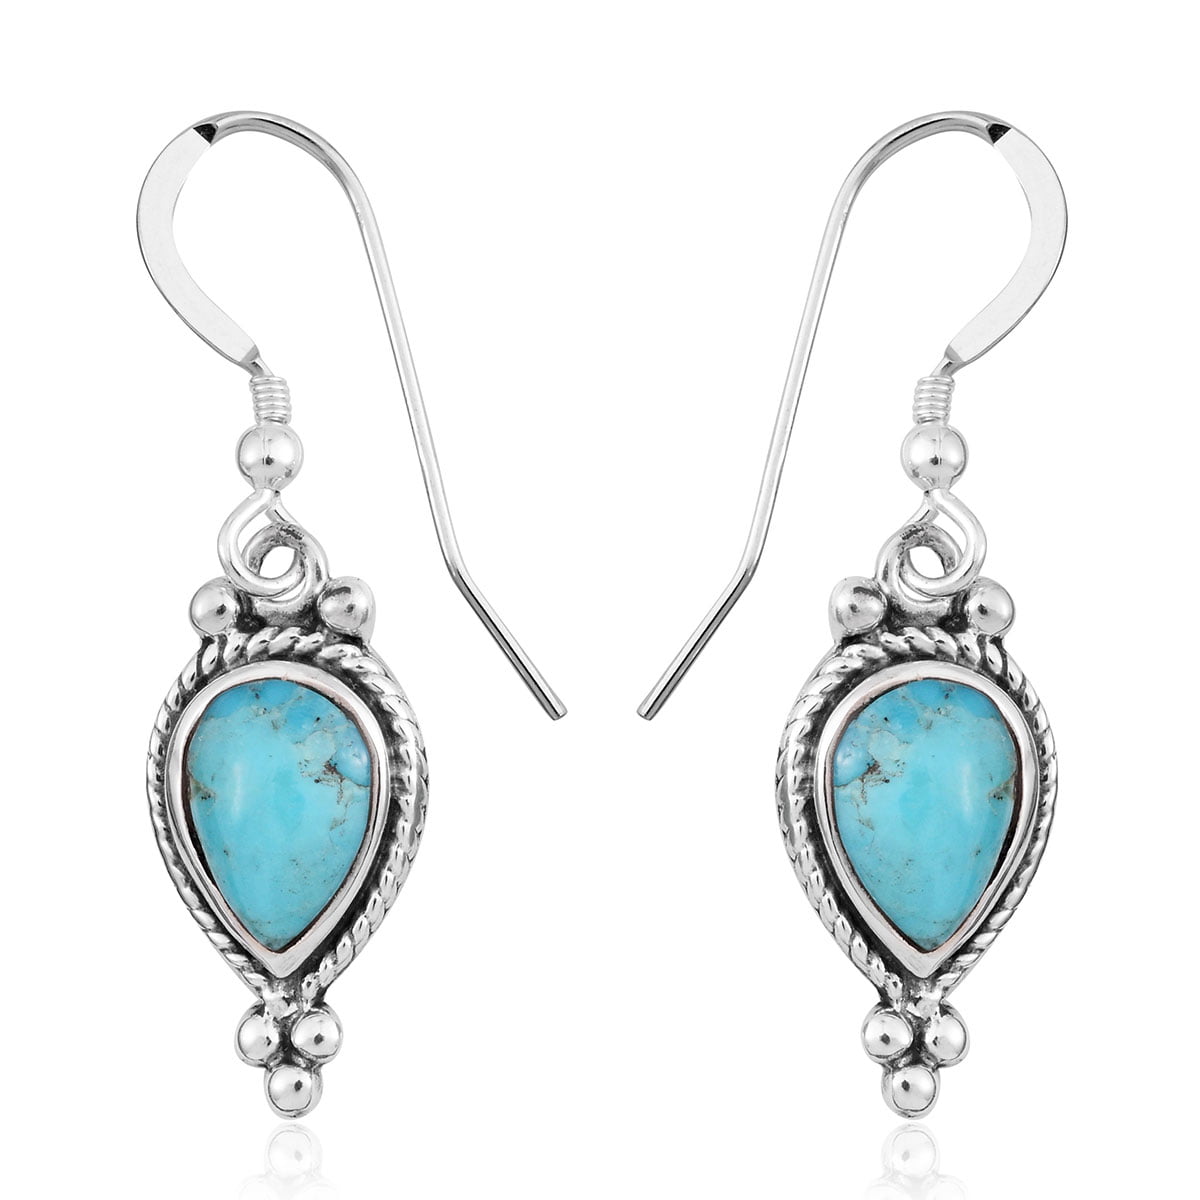 Ladies Boho Ethnic Tibetan Sterling Silver Turquoise Beads Long Hook Earrings